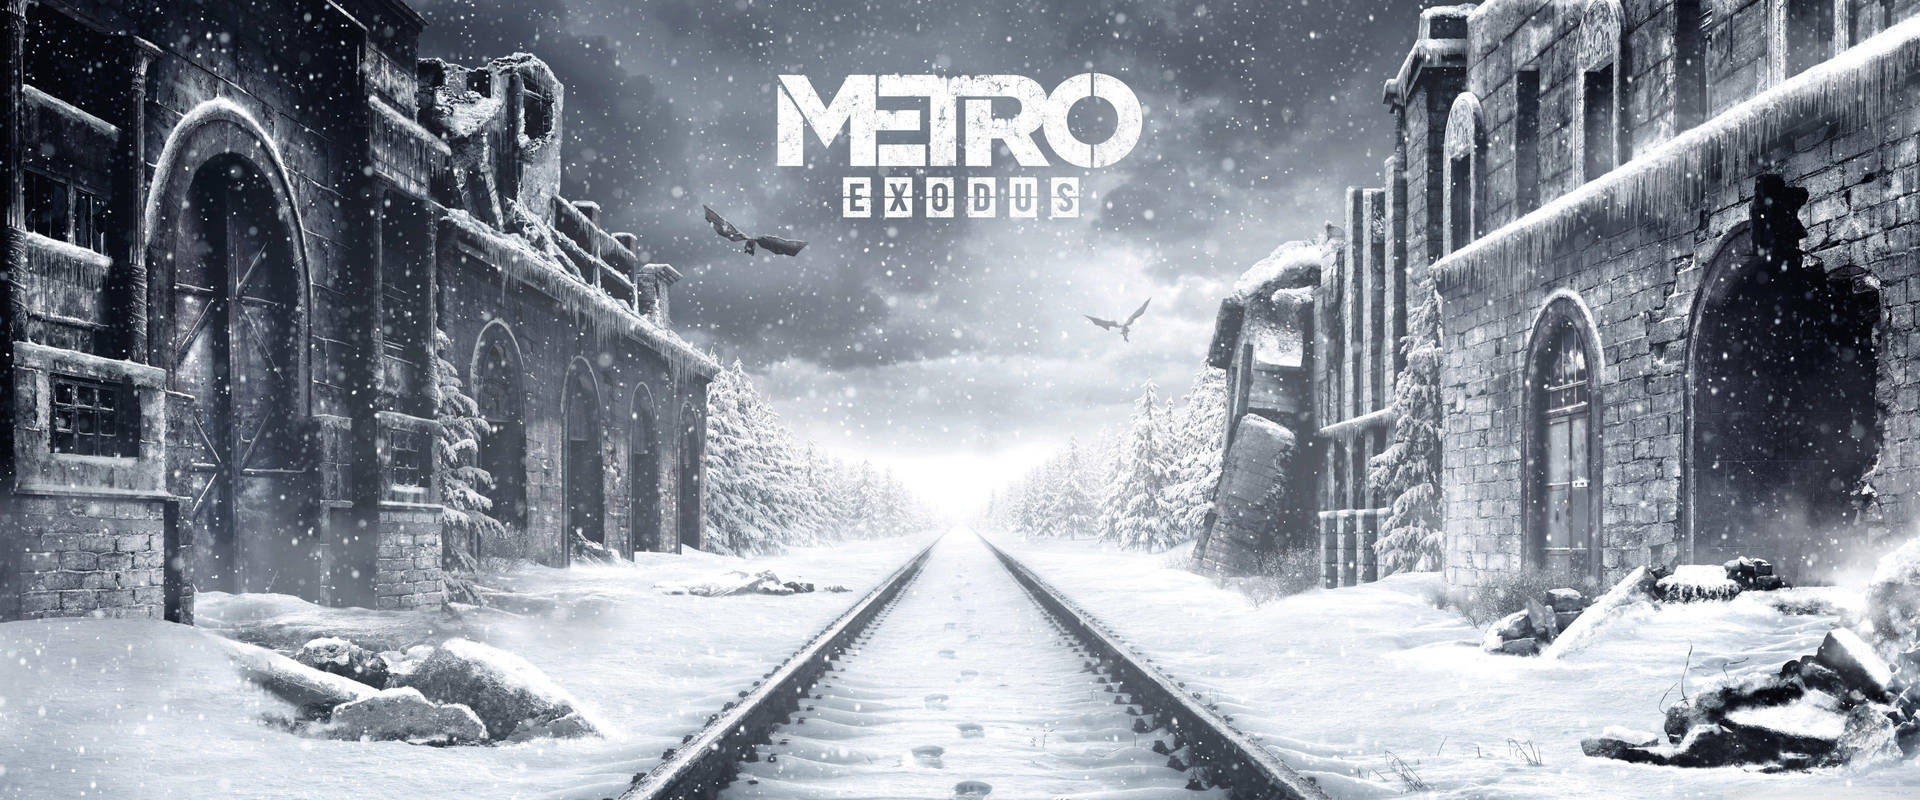 Metro Exodus 3840X1600 Wallpaper and Background Image